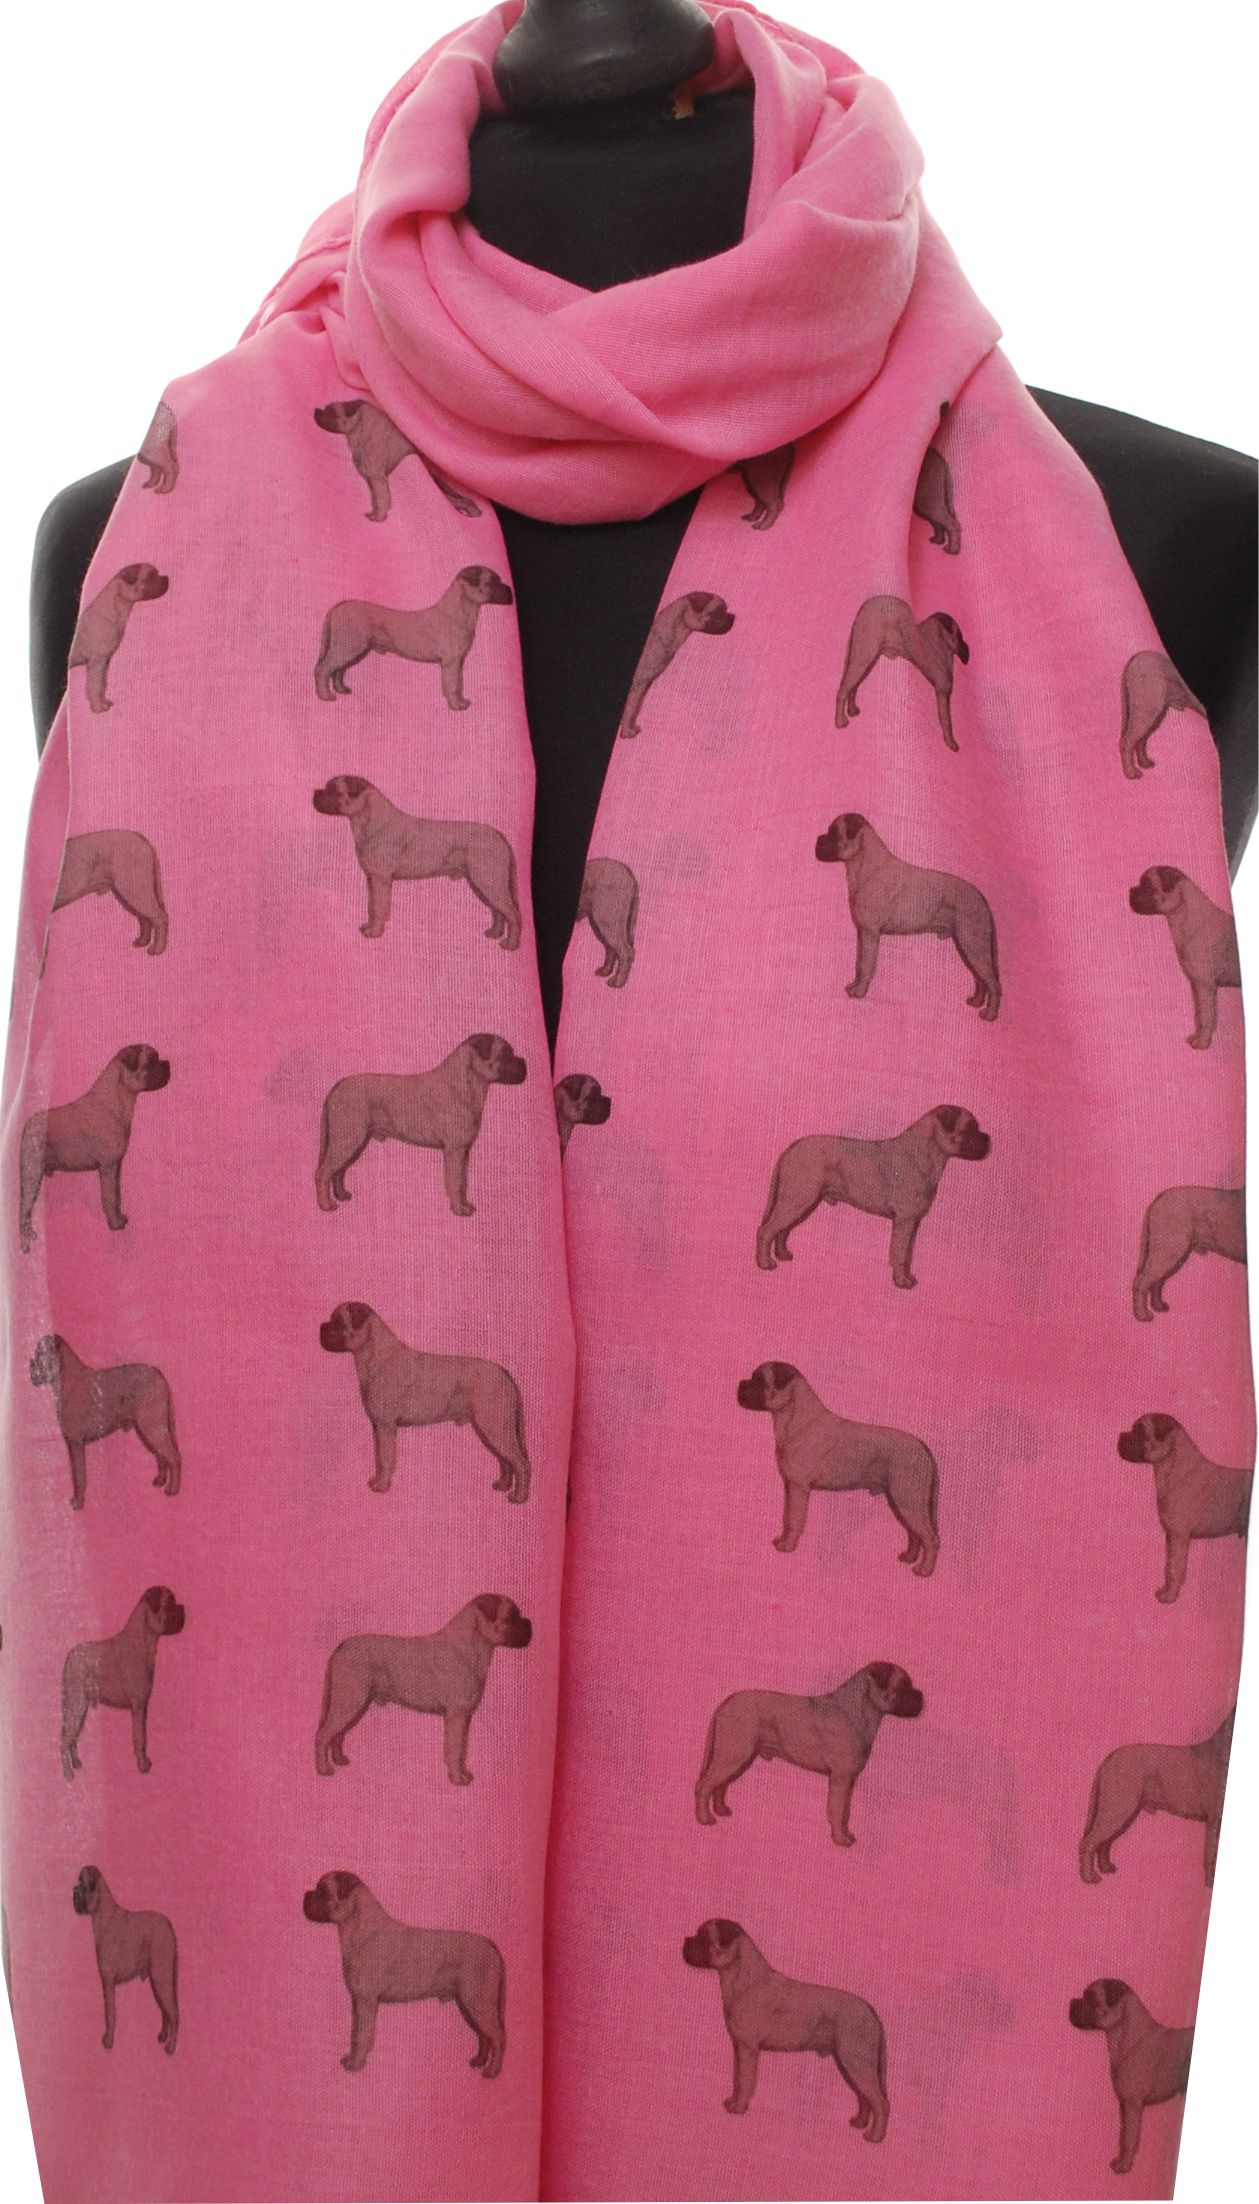 Mastiff hand printed ladies fashion scarf